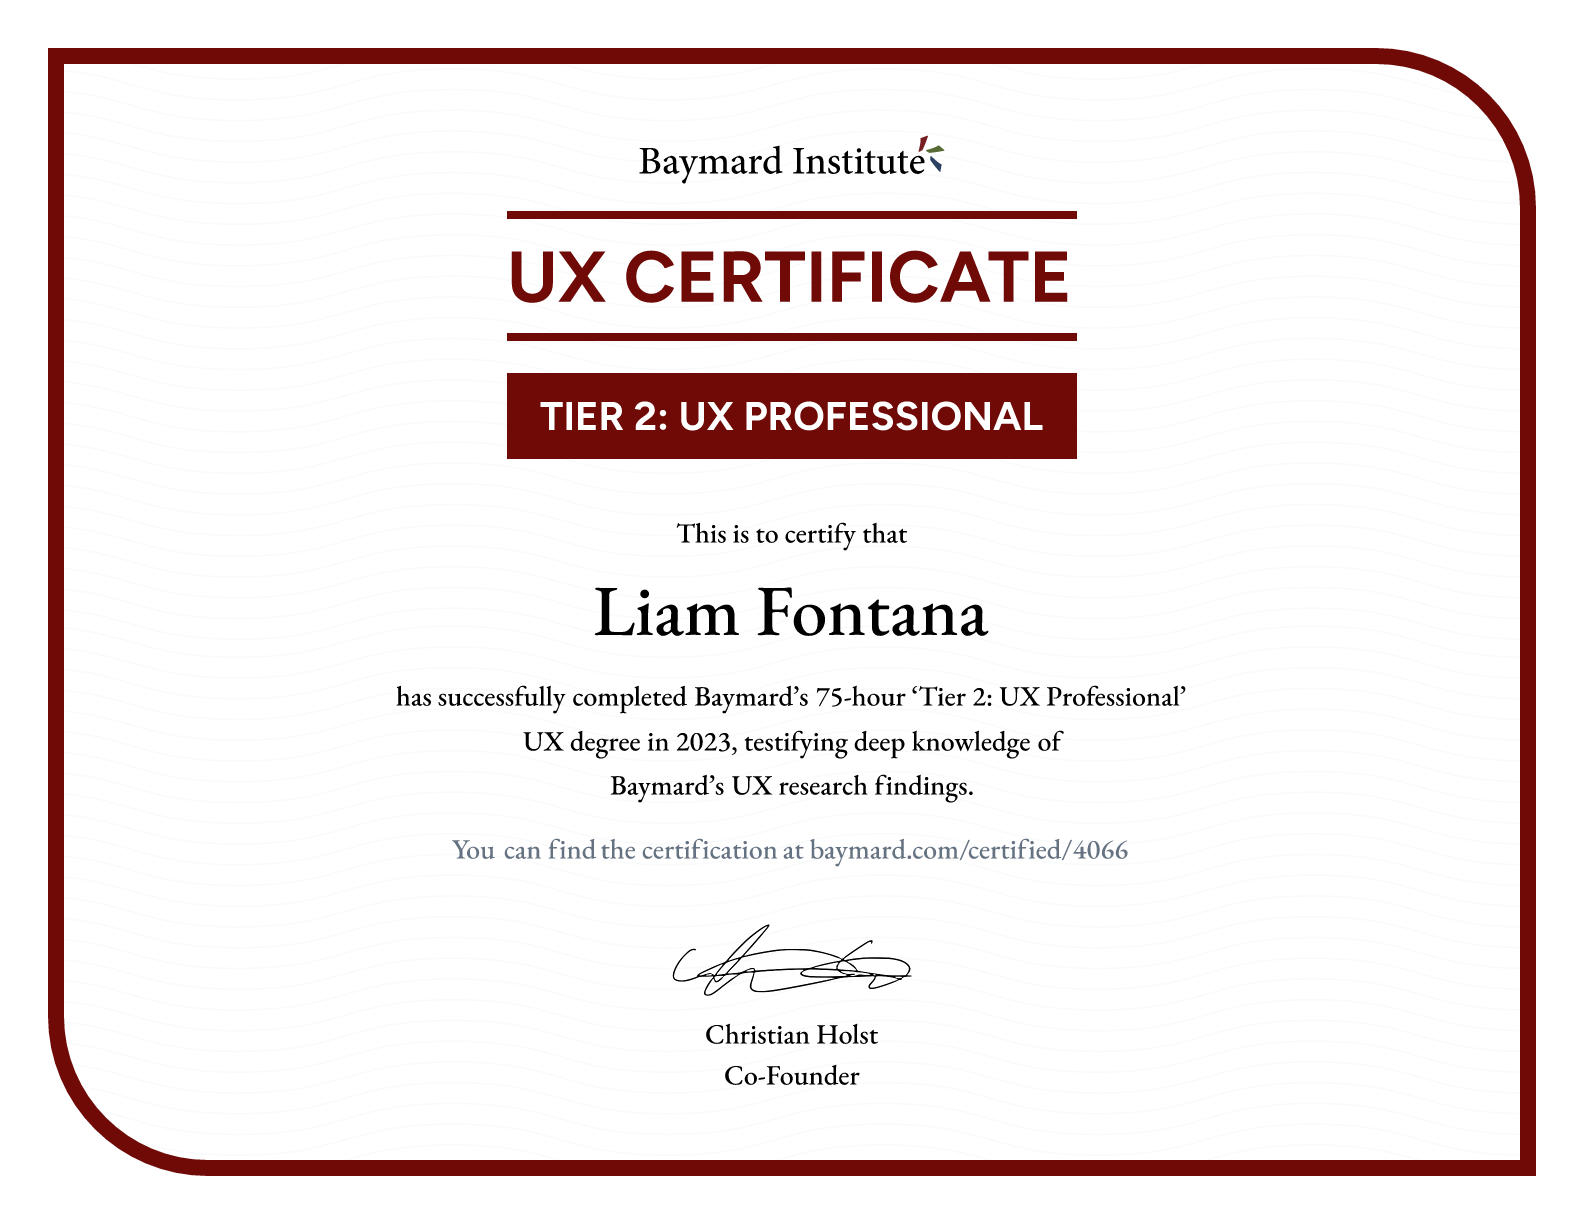 Liam Fontana’s certificate